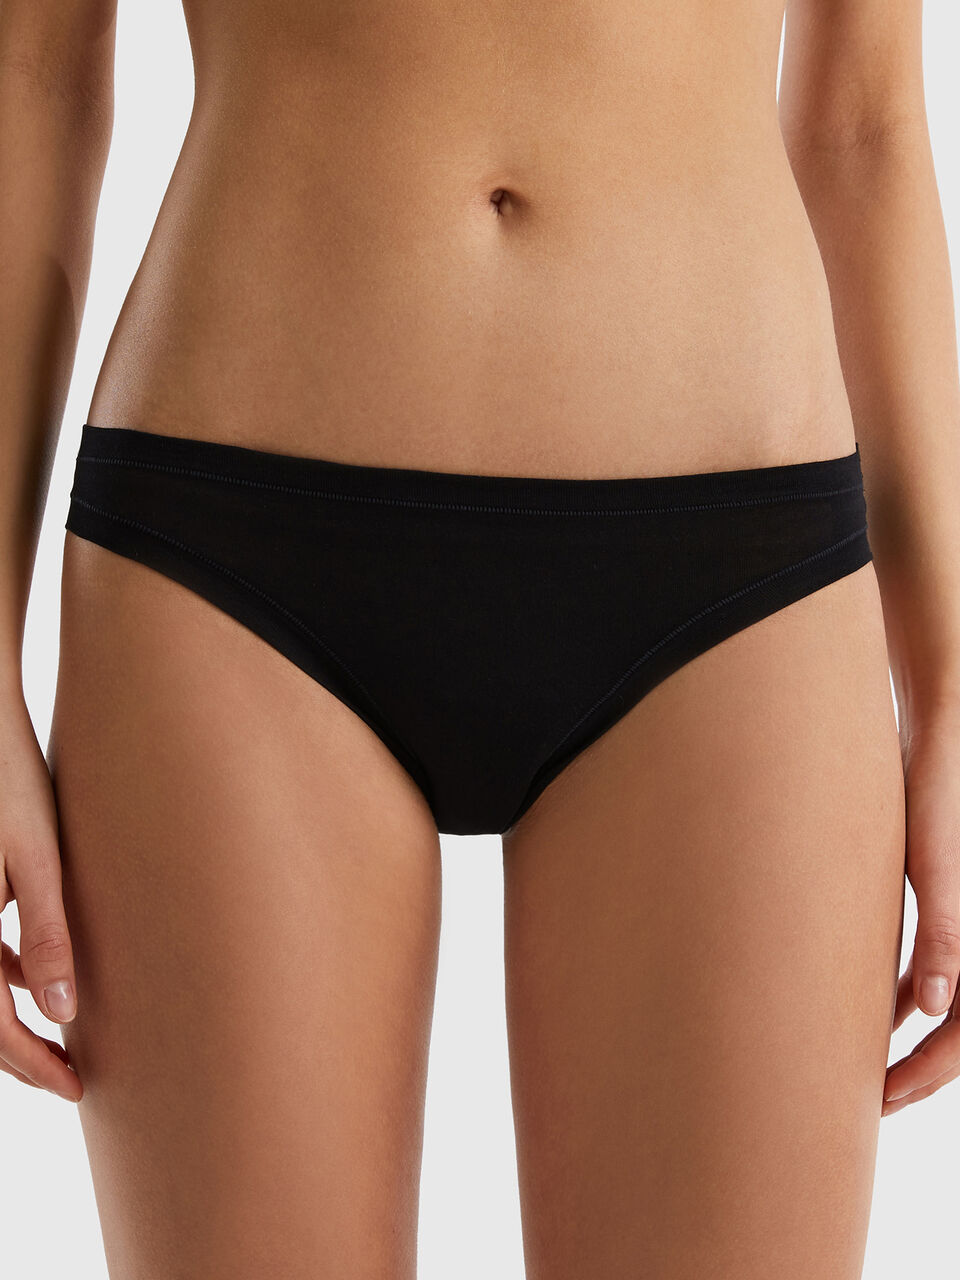 B91xZ Women's Cotton Bikini Brief Underwear Cute Low Rise Bikini Panties, Black One Size 